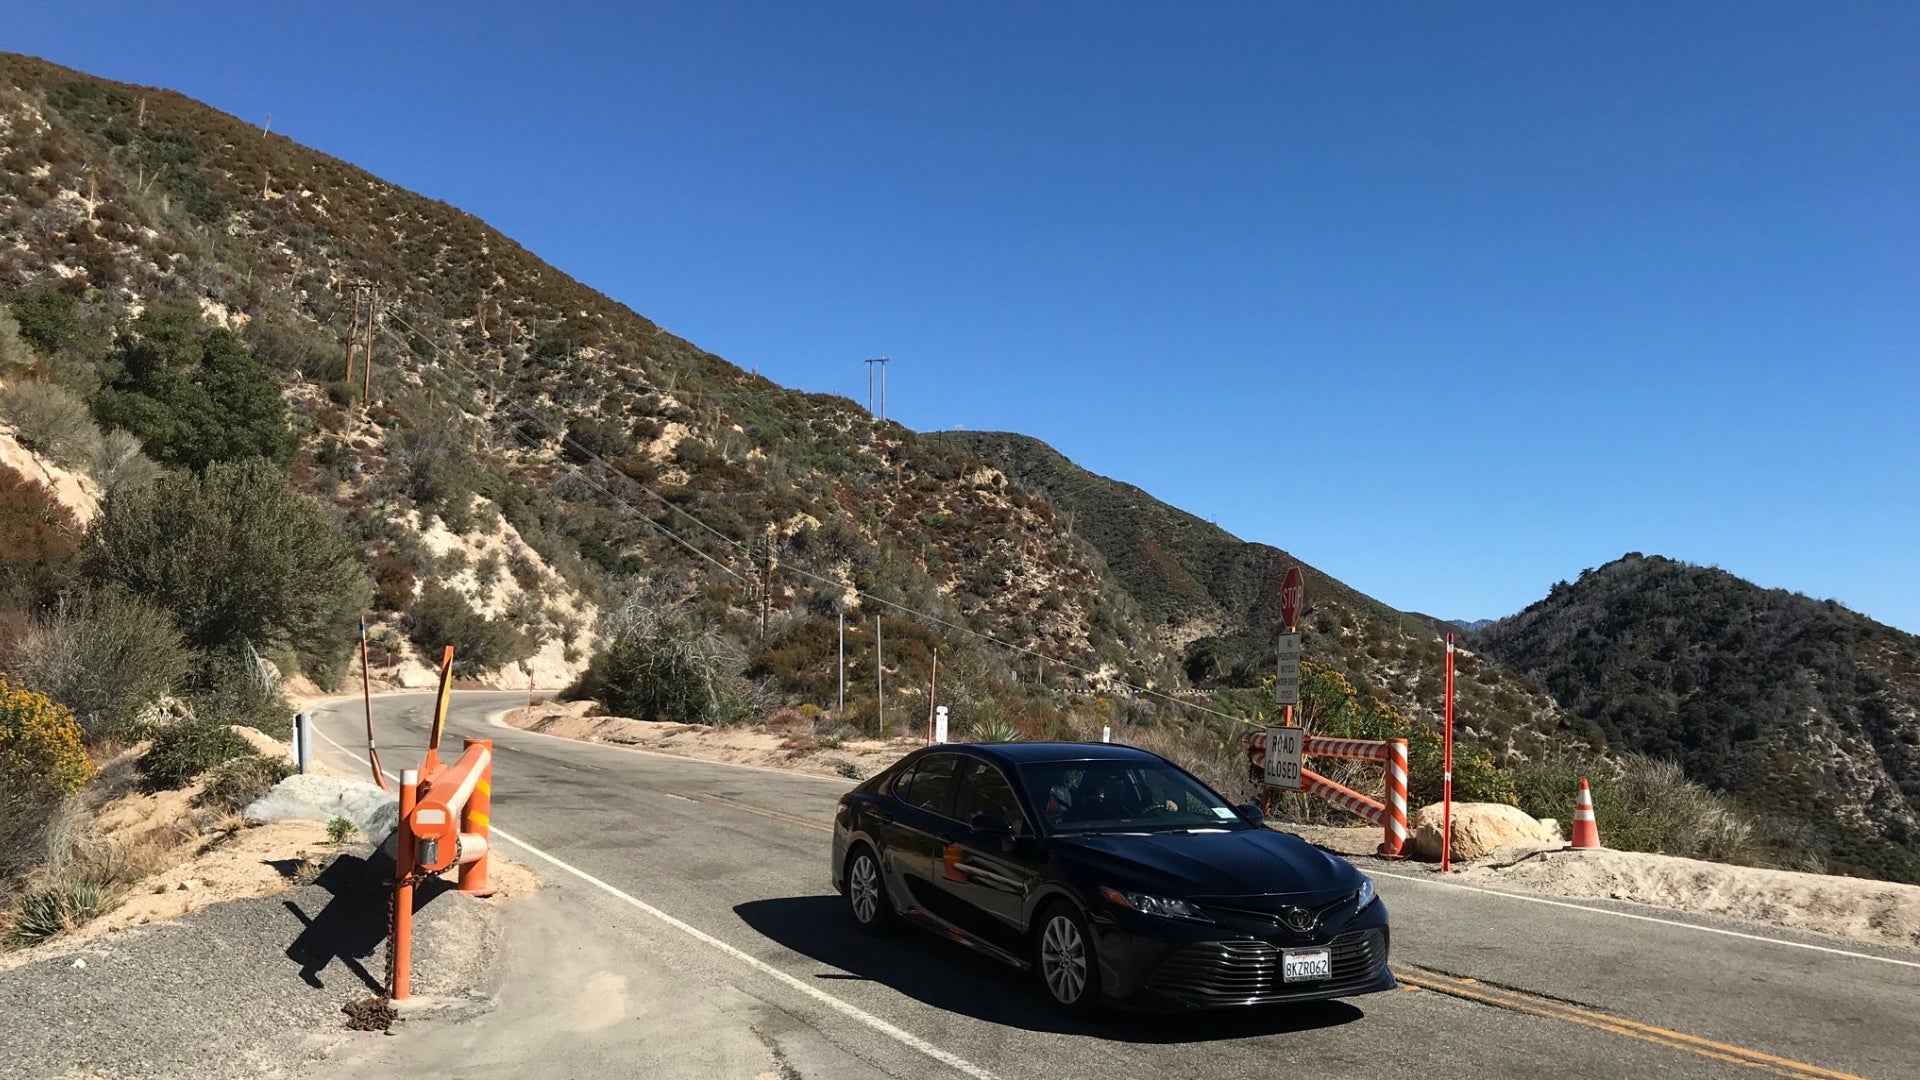 California’s Angeles Crest Highway Reopens 8 Months After Massive Landslide Shut it Down